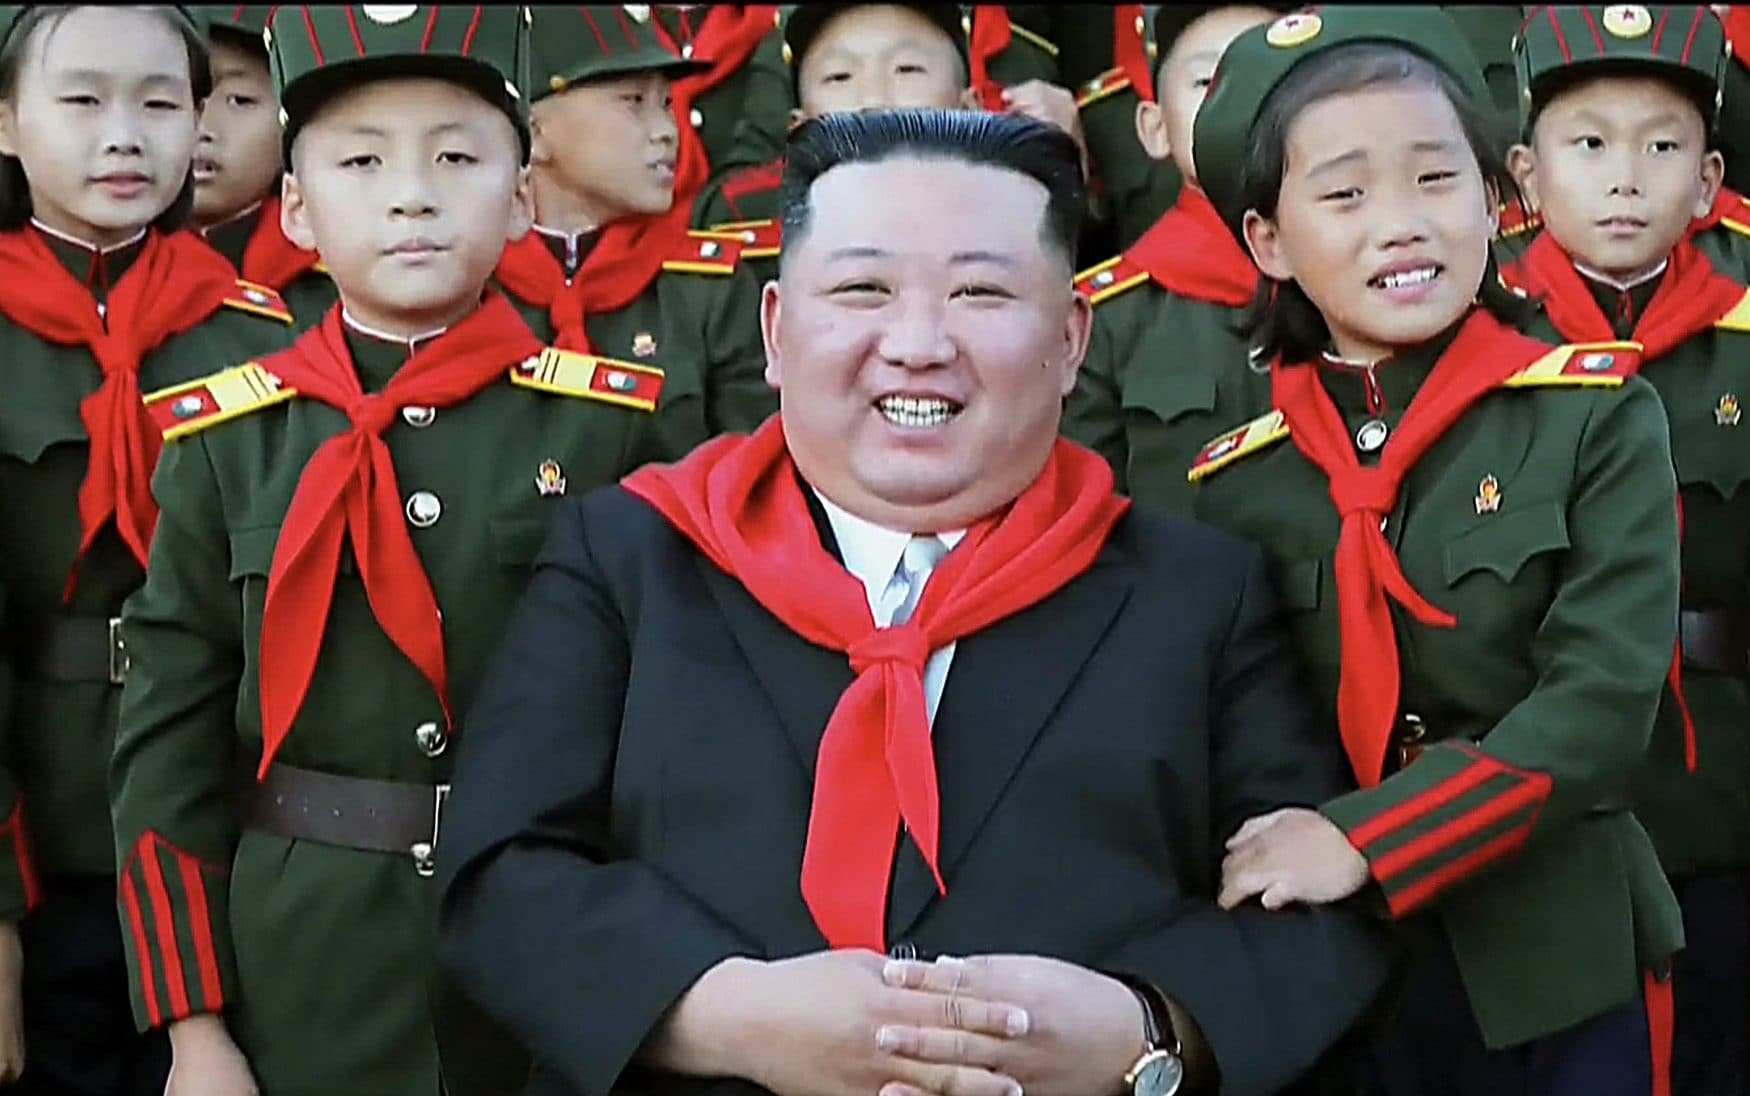 Dystopian in the catchiest way – how Kim Jong-un’s propaganda song conquered TikTok